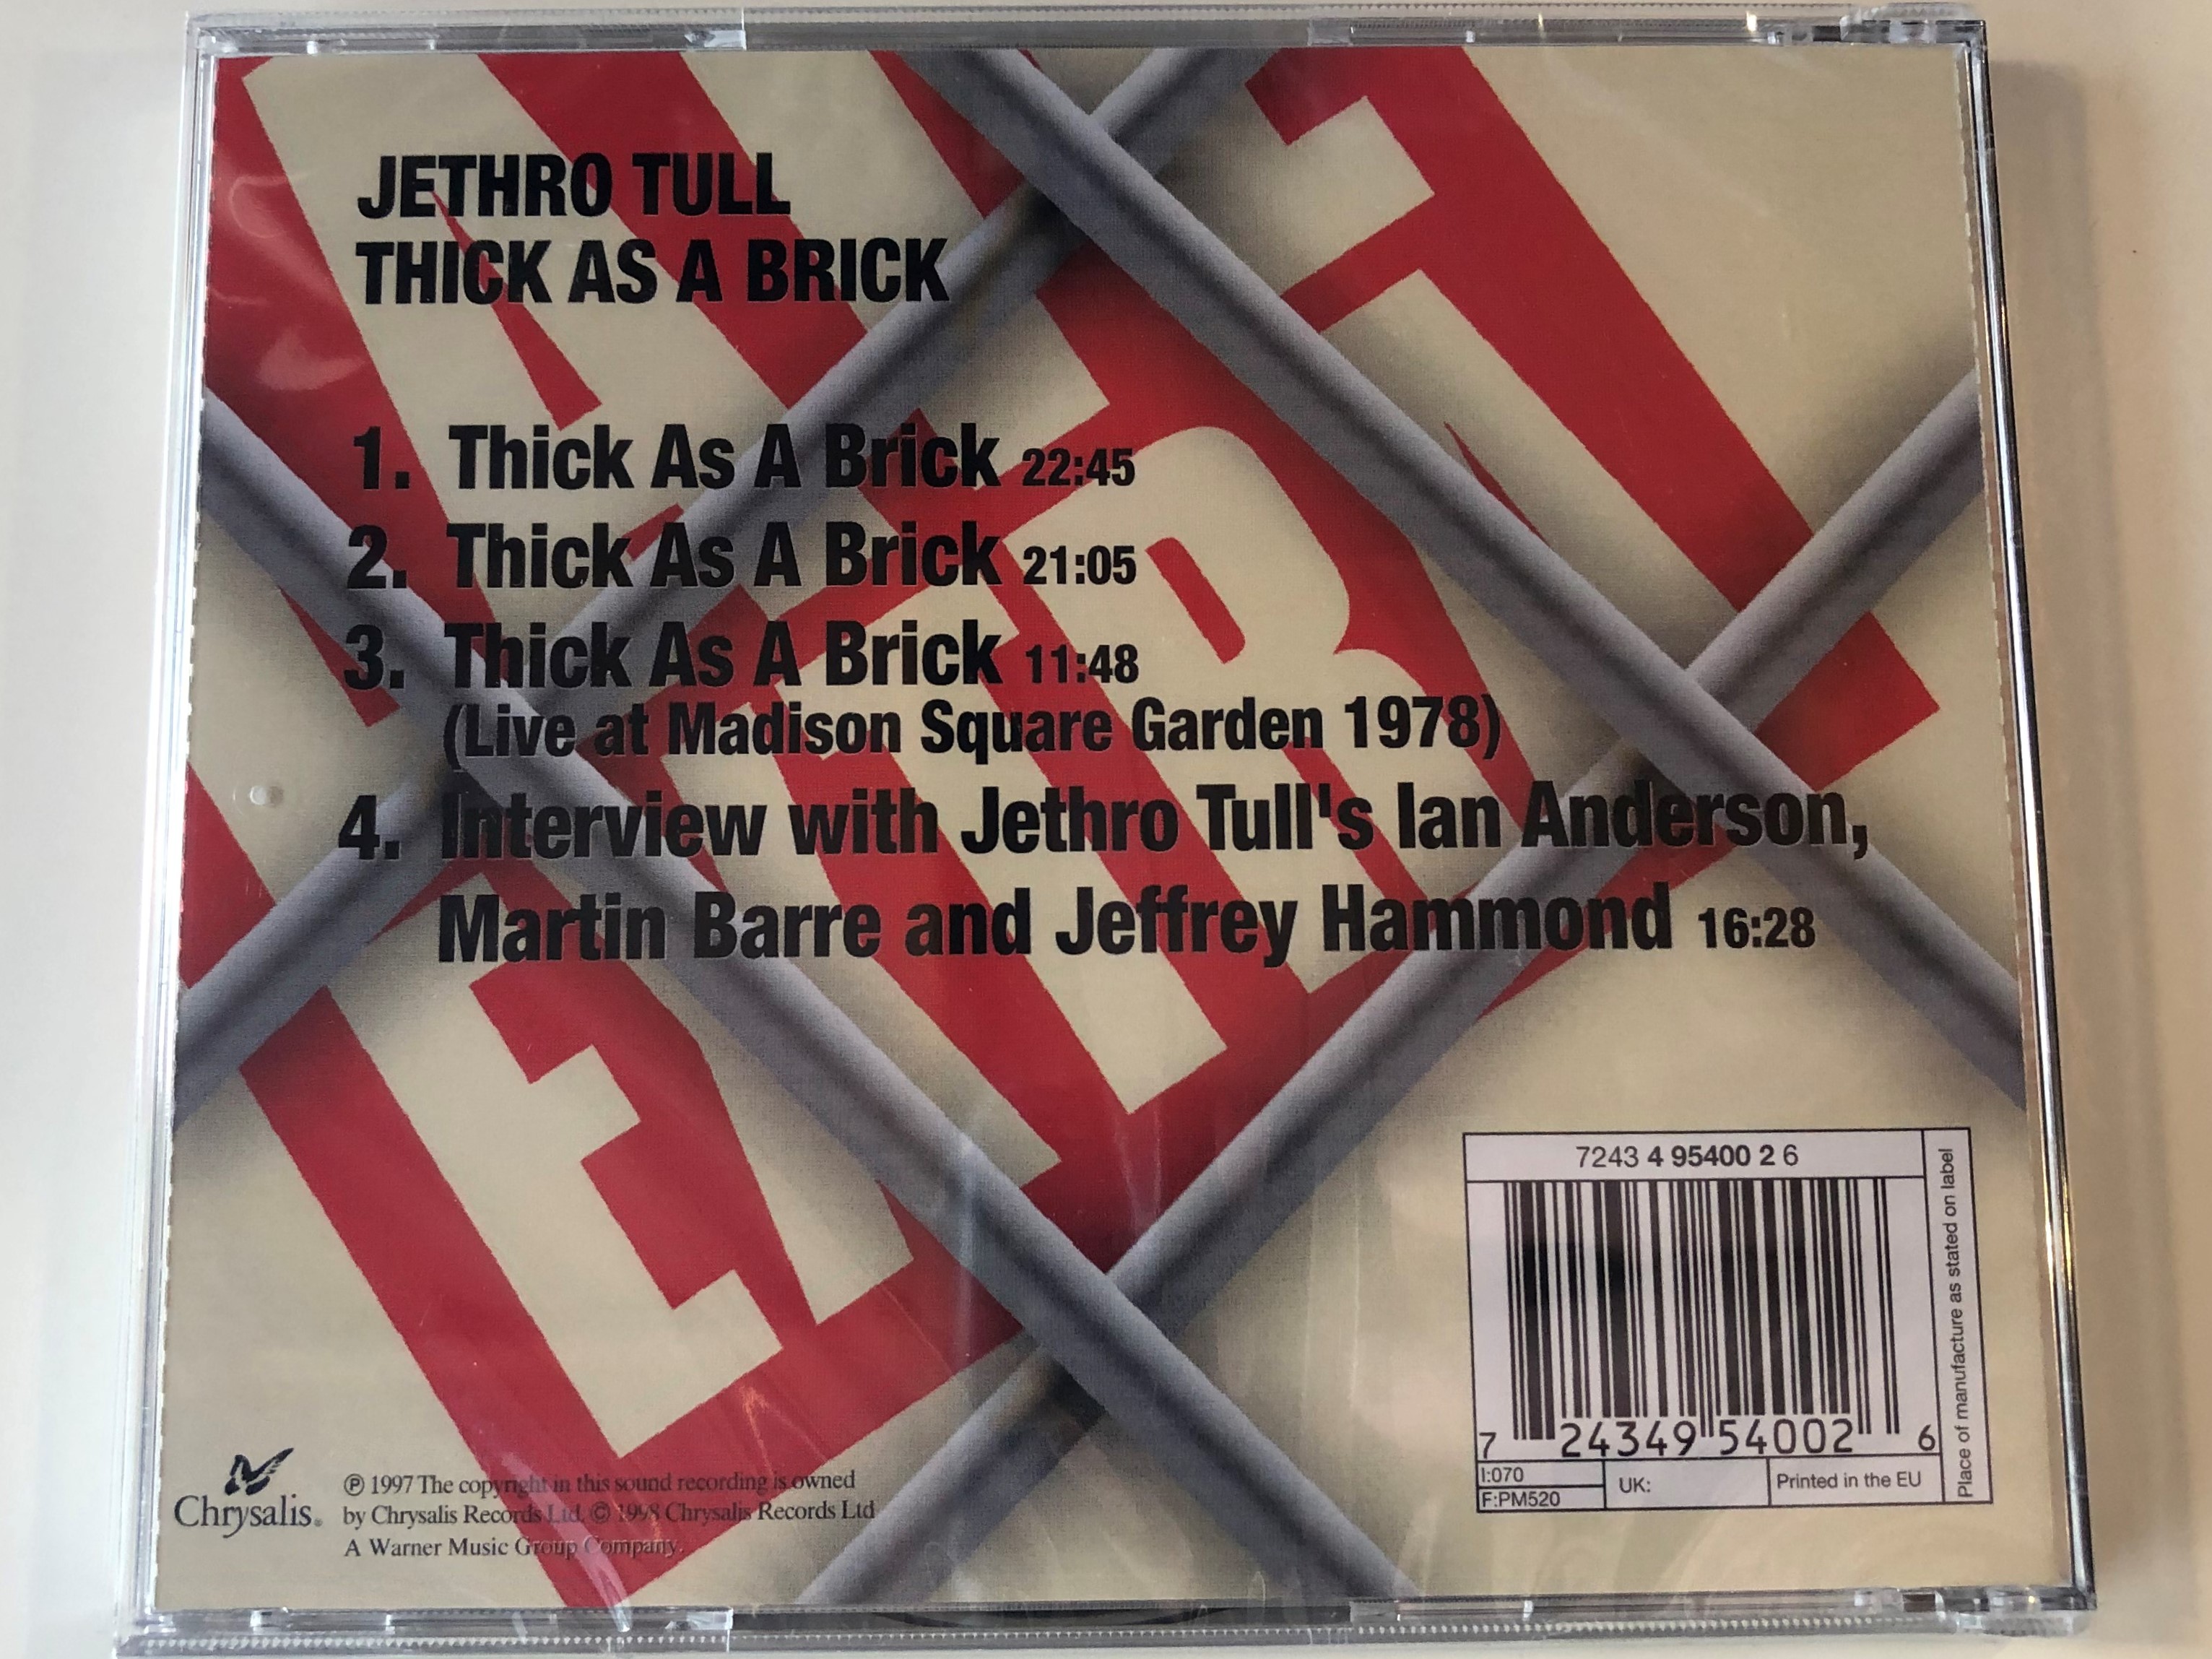 jethro-tull-thick-as-a-brick-emi-music-audio-cd-1997-4-95400-2-2-.jpg